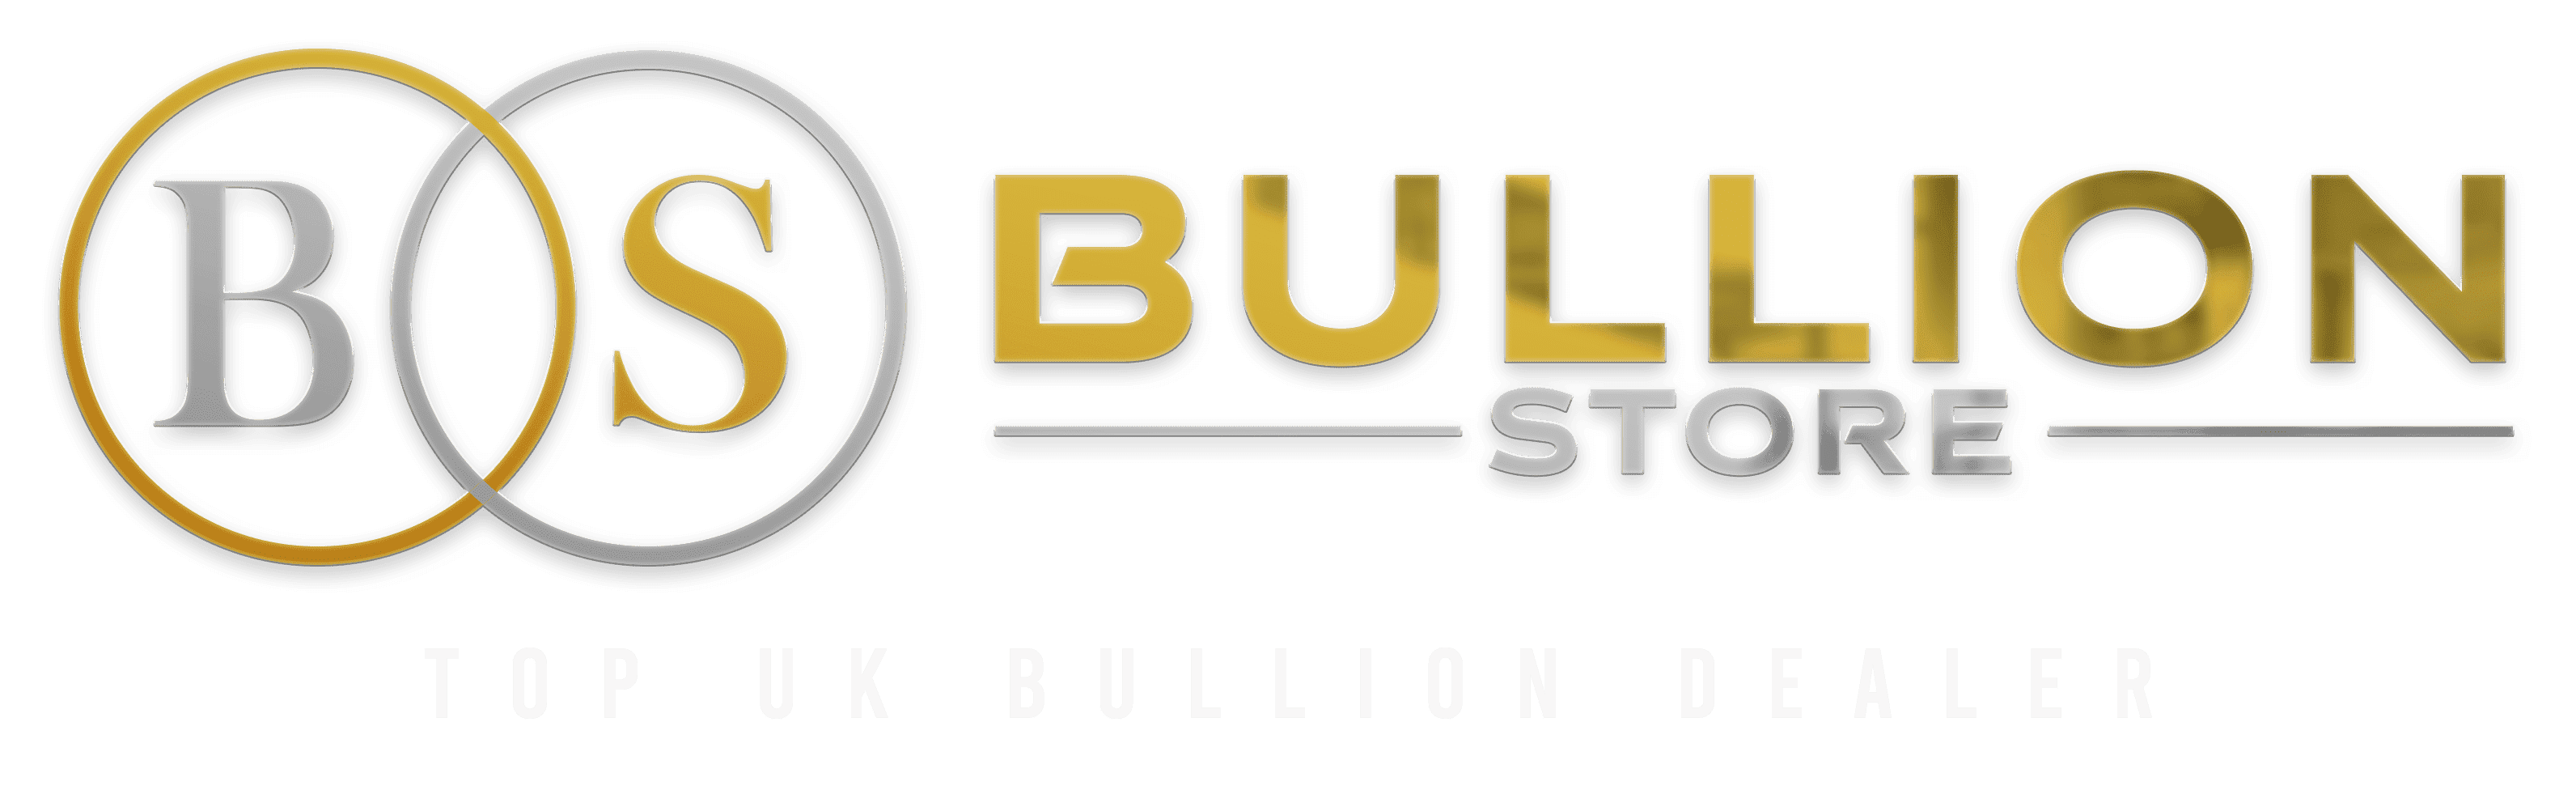 Bullion Store Uk